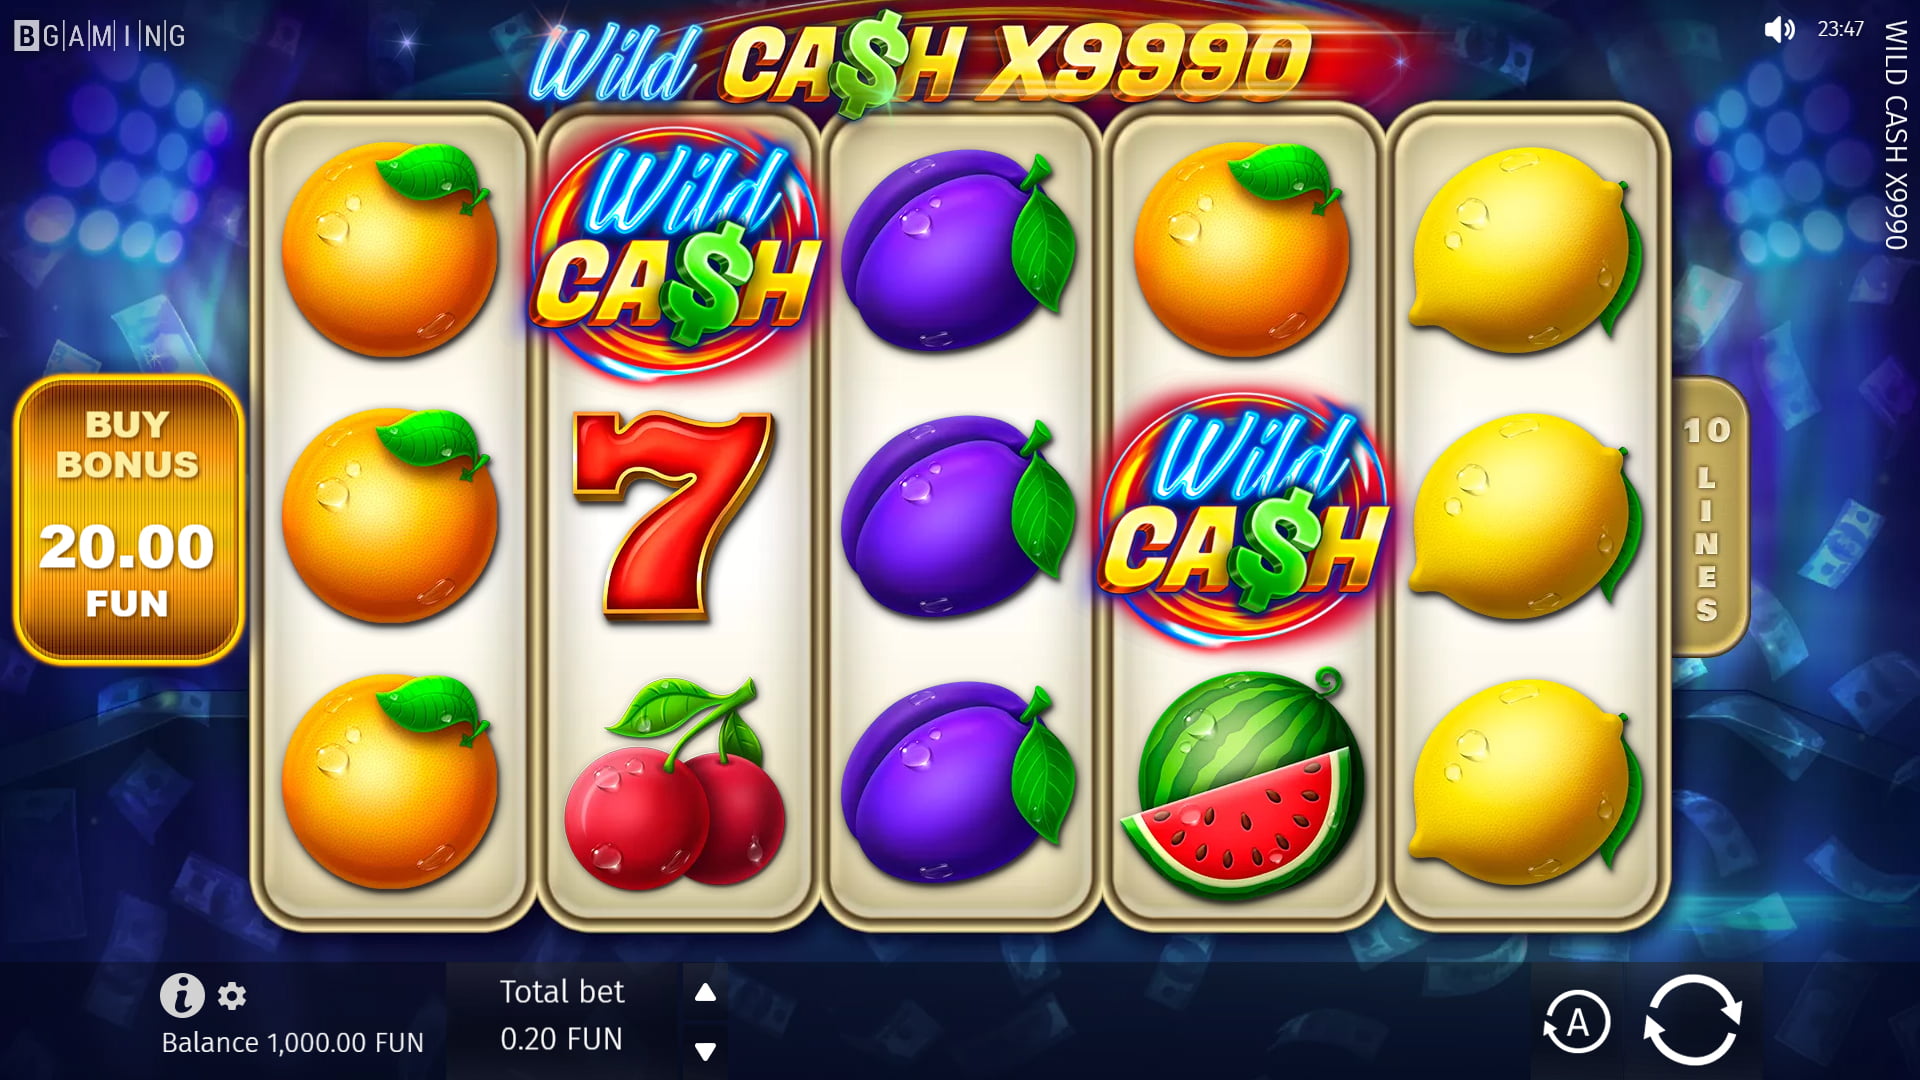 WILD CASH x9990 Slot